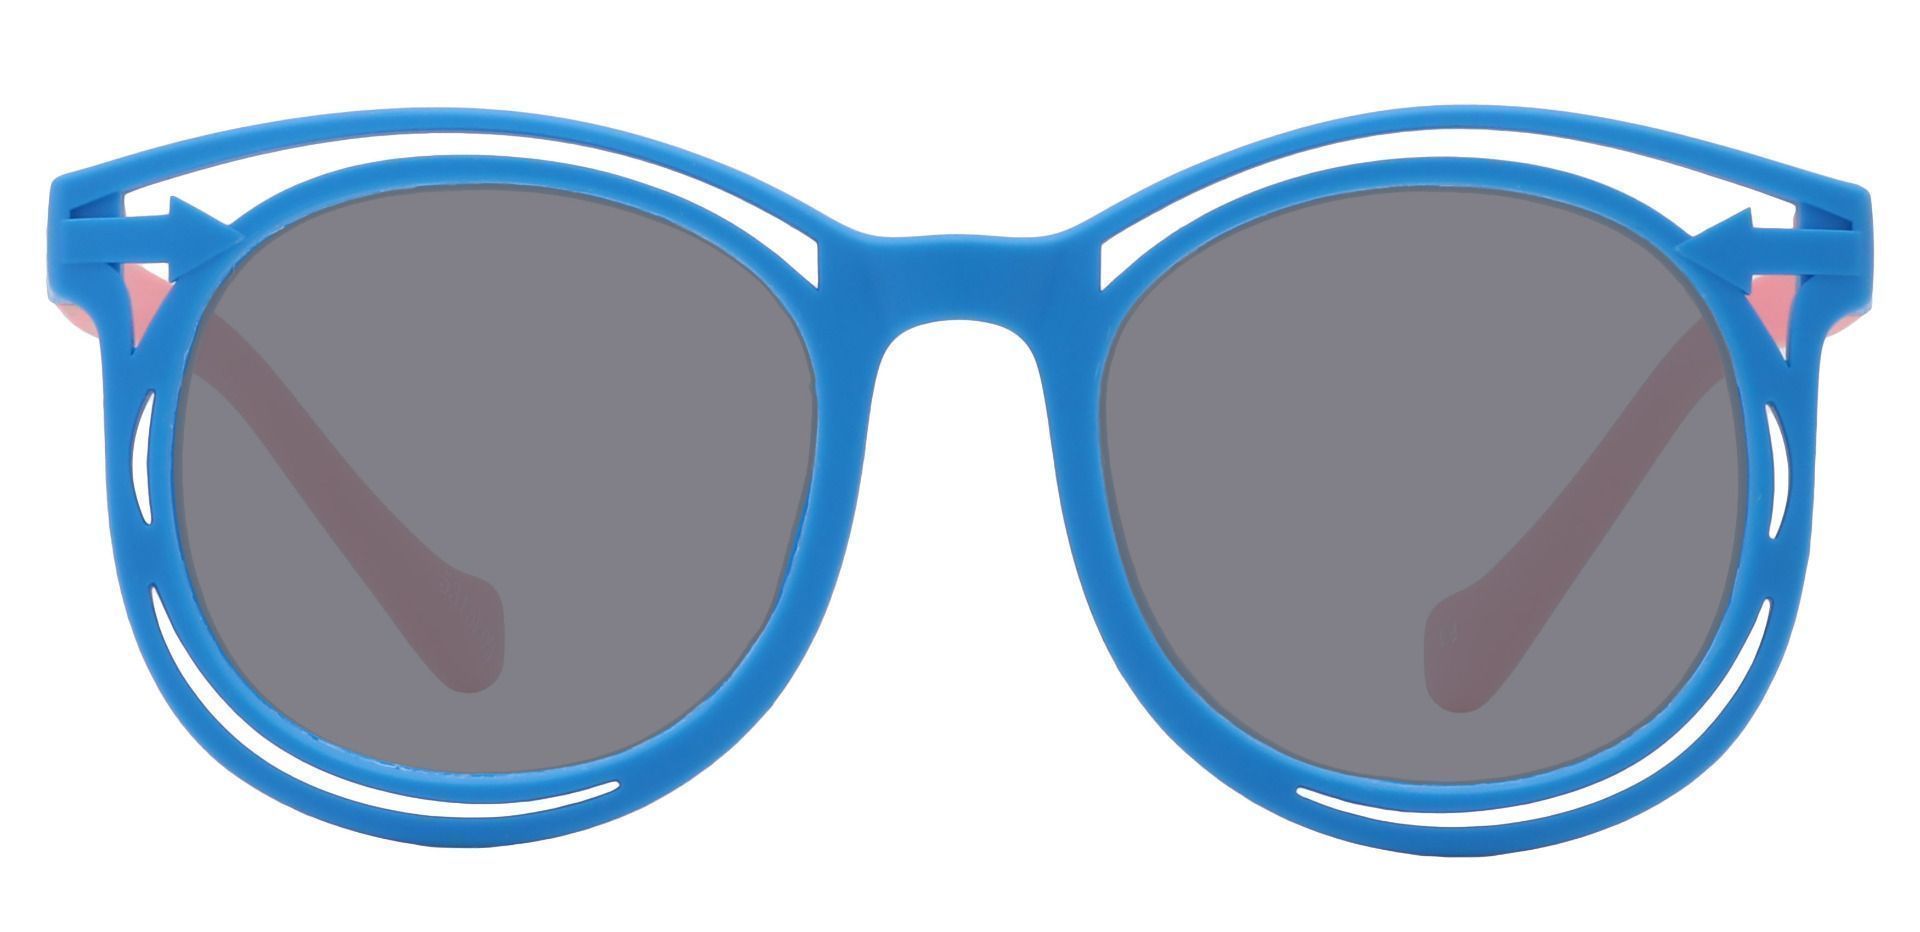 Bolt Round Reading Sunglasses - Blue Frame With Gray Lenses